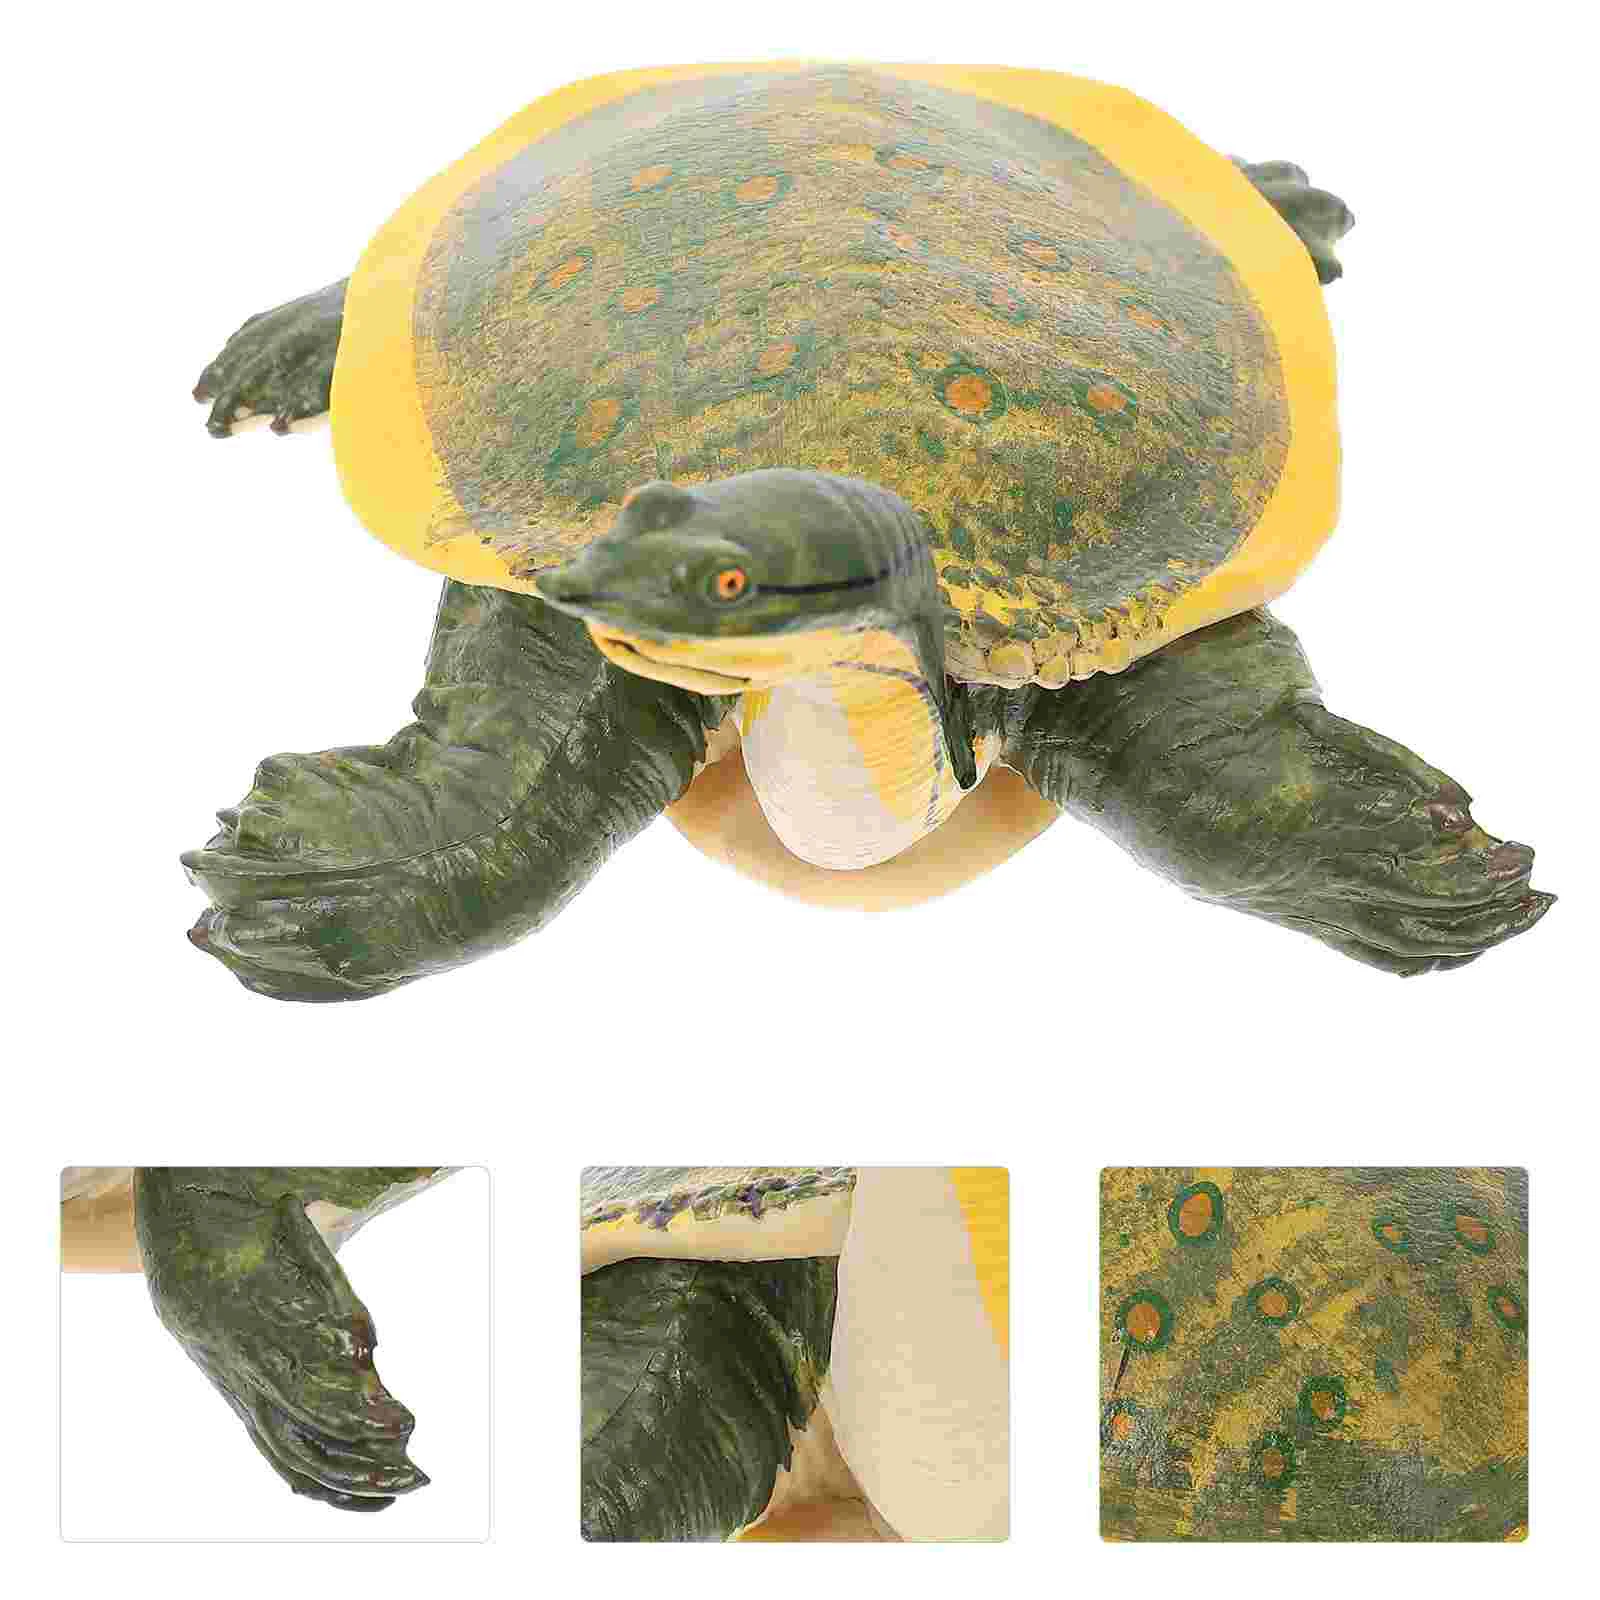 

Children's Toys Turtle Model Amphibious Animals Ocean Sea Adornments Accessories Kids Gift